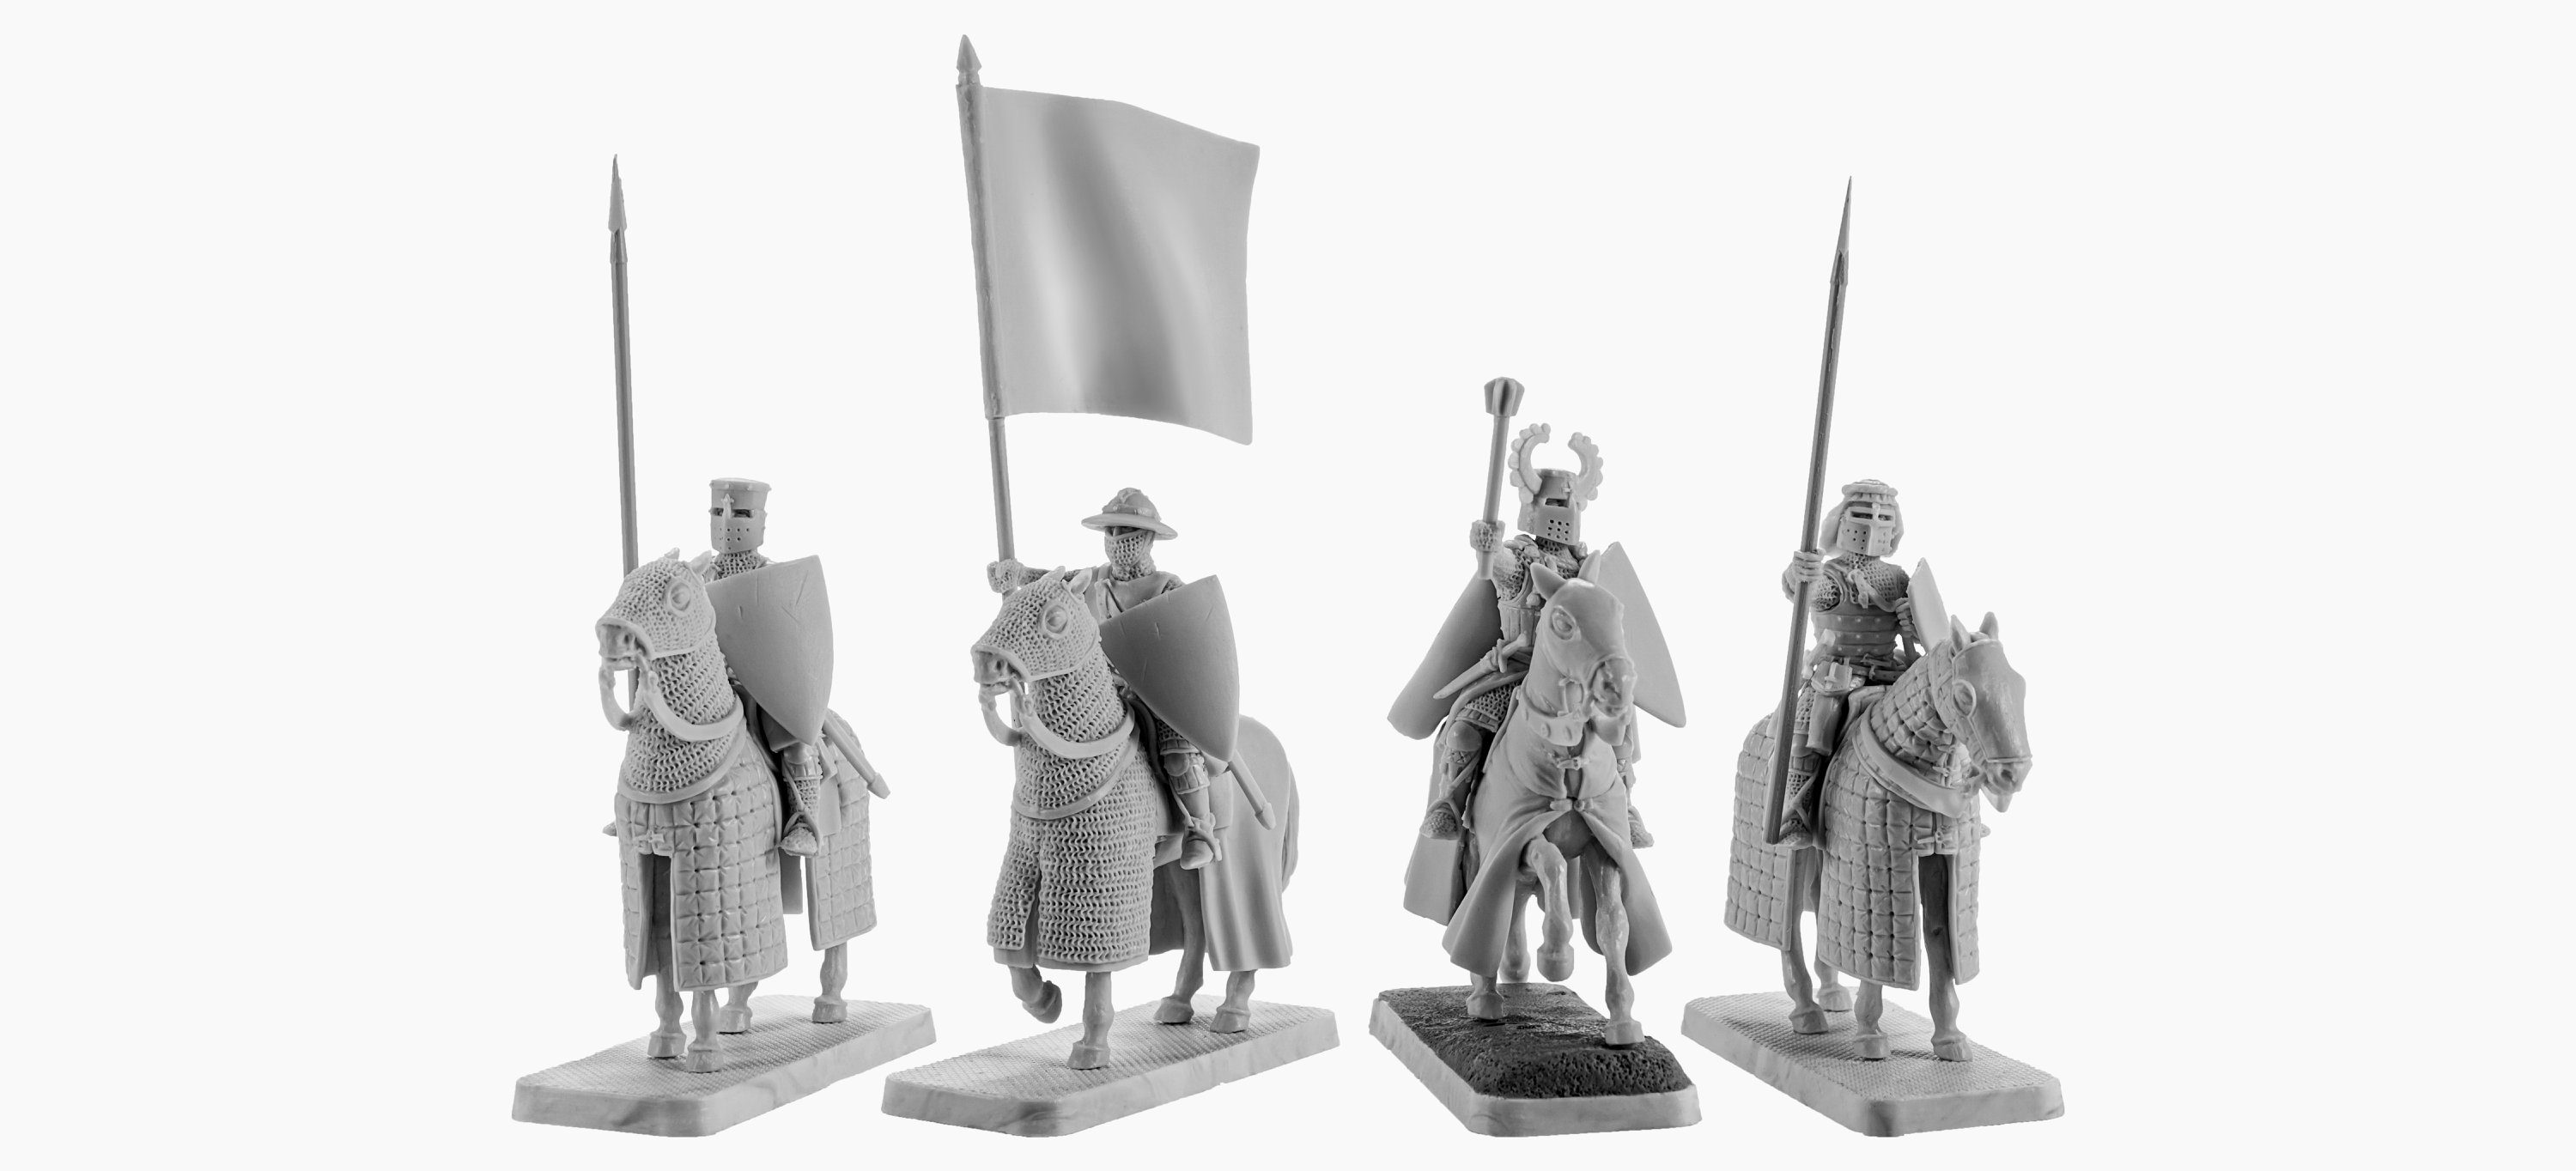 Mounted Crusaders Command #1 - V&V Miniatures